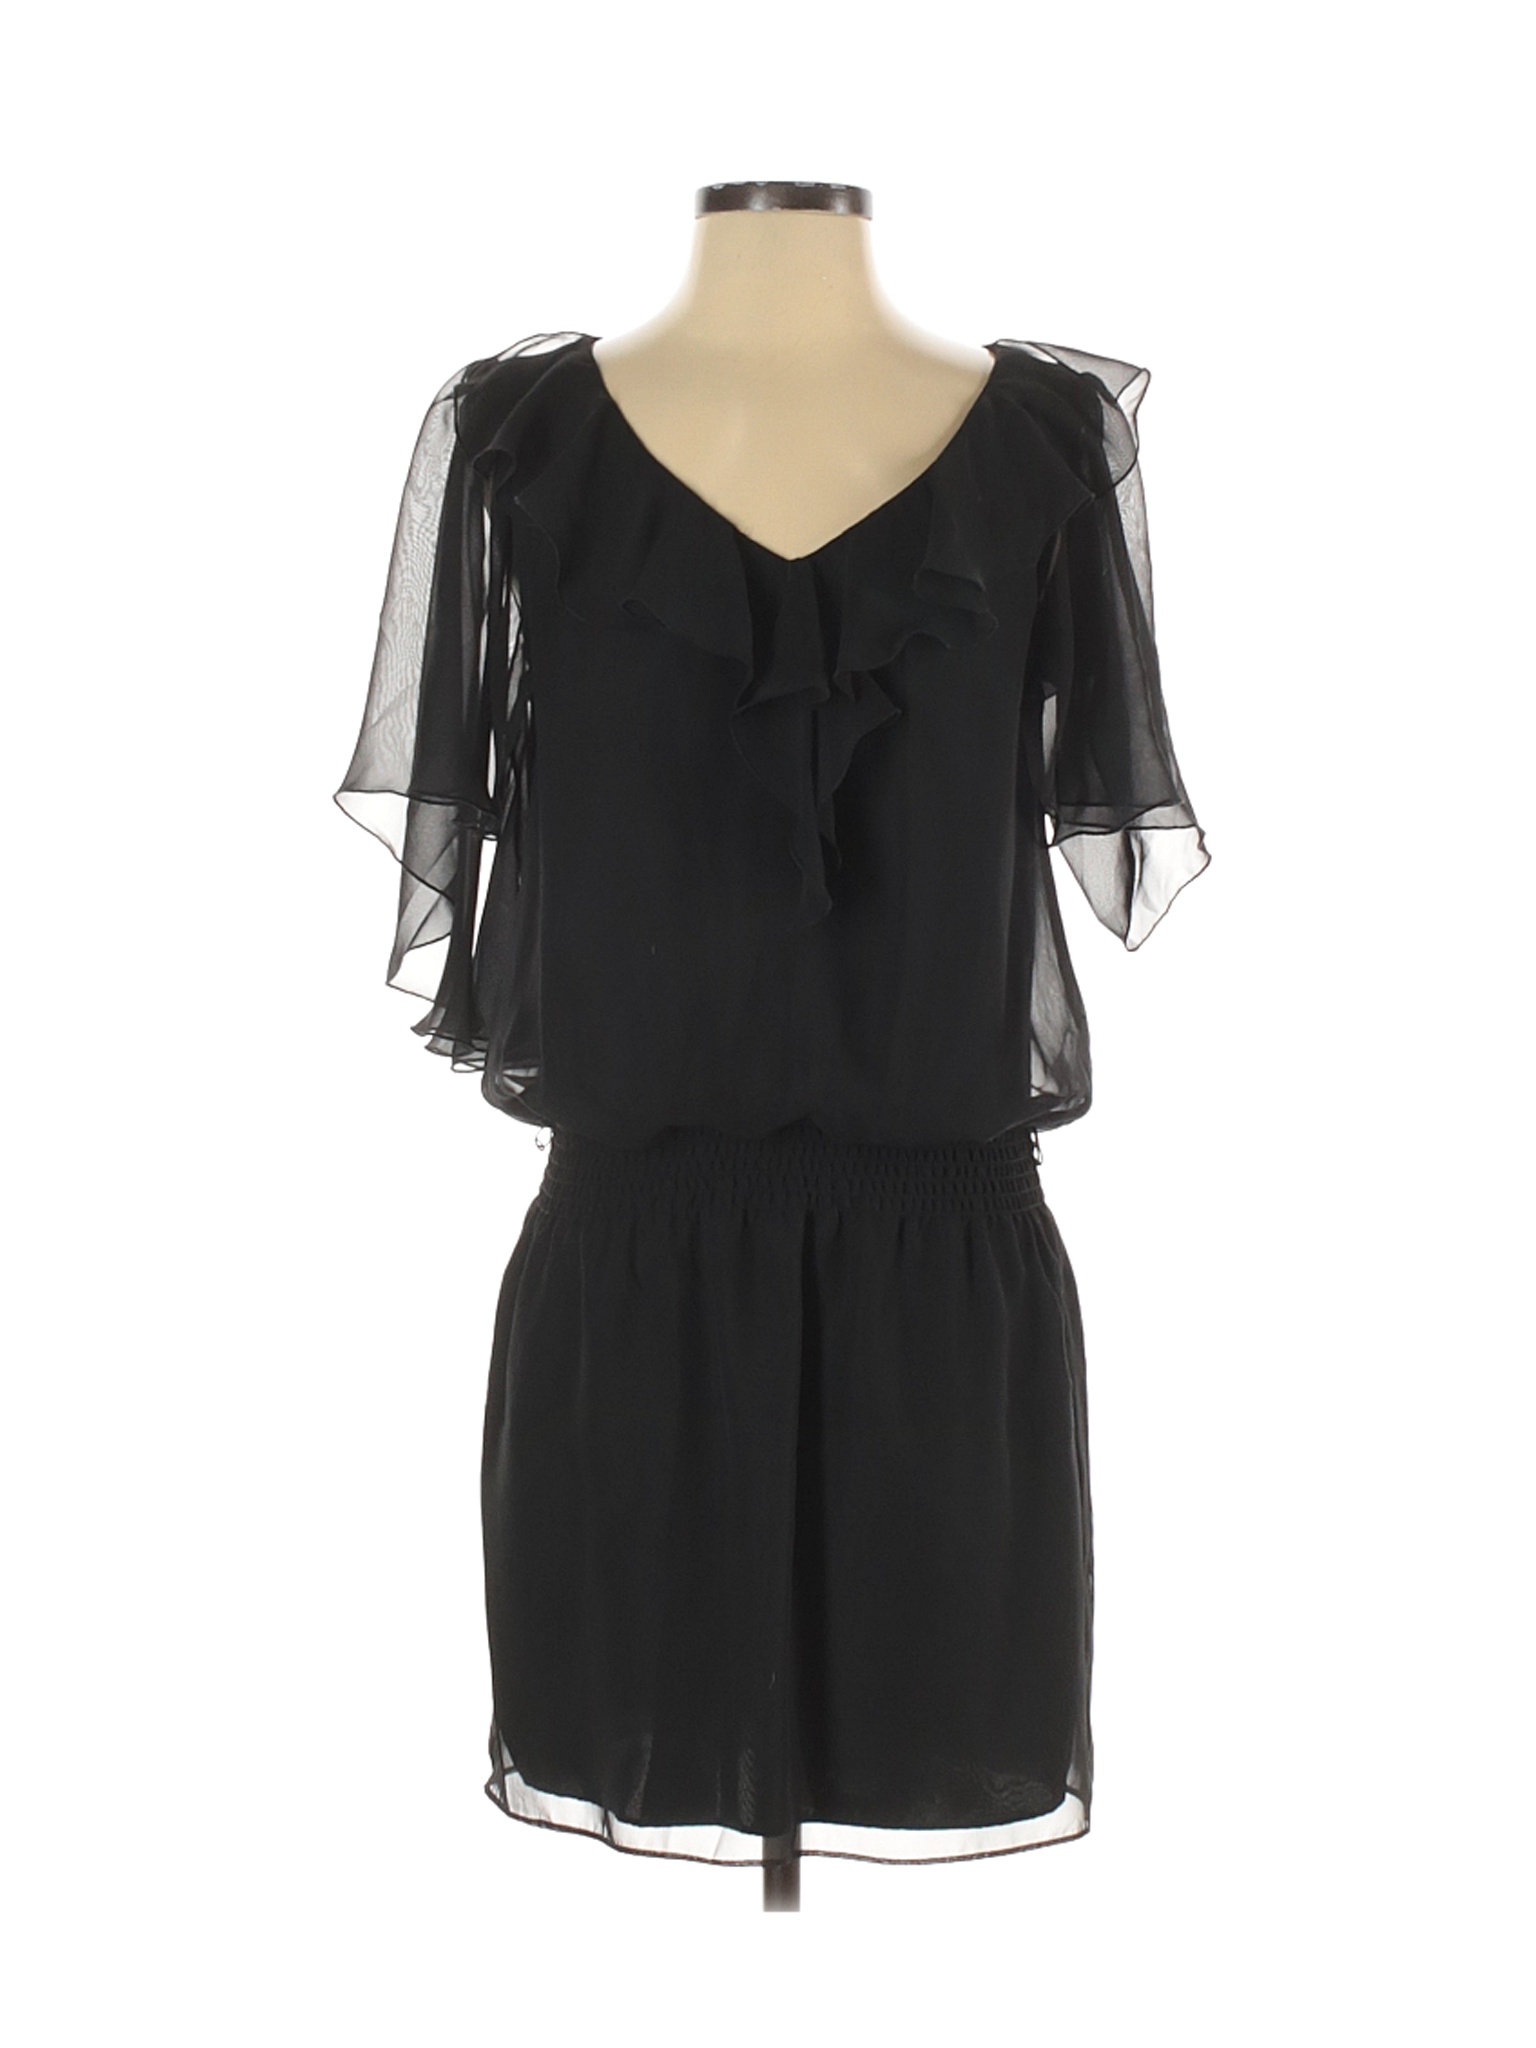 The White House Women Black Casual Dress XS | eBay